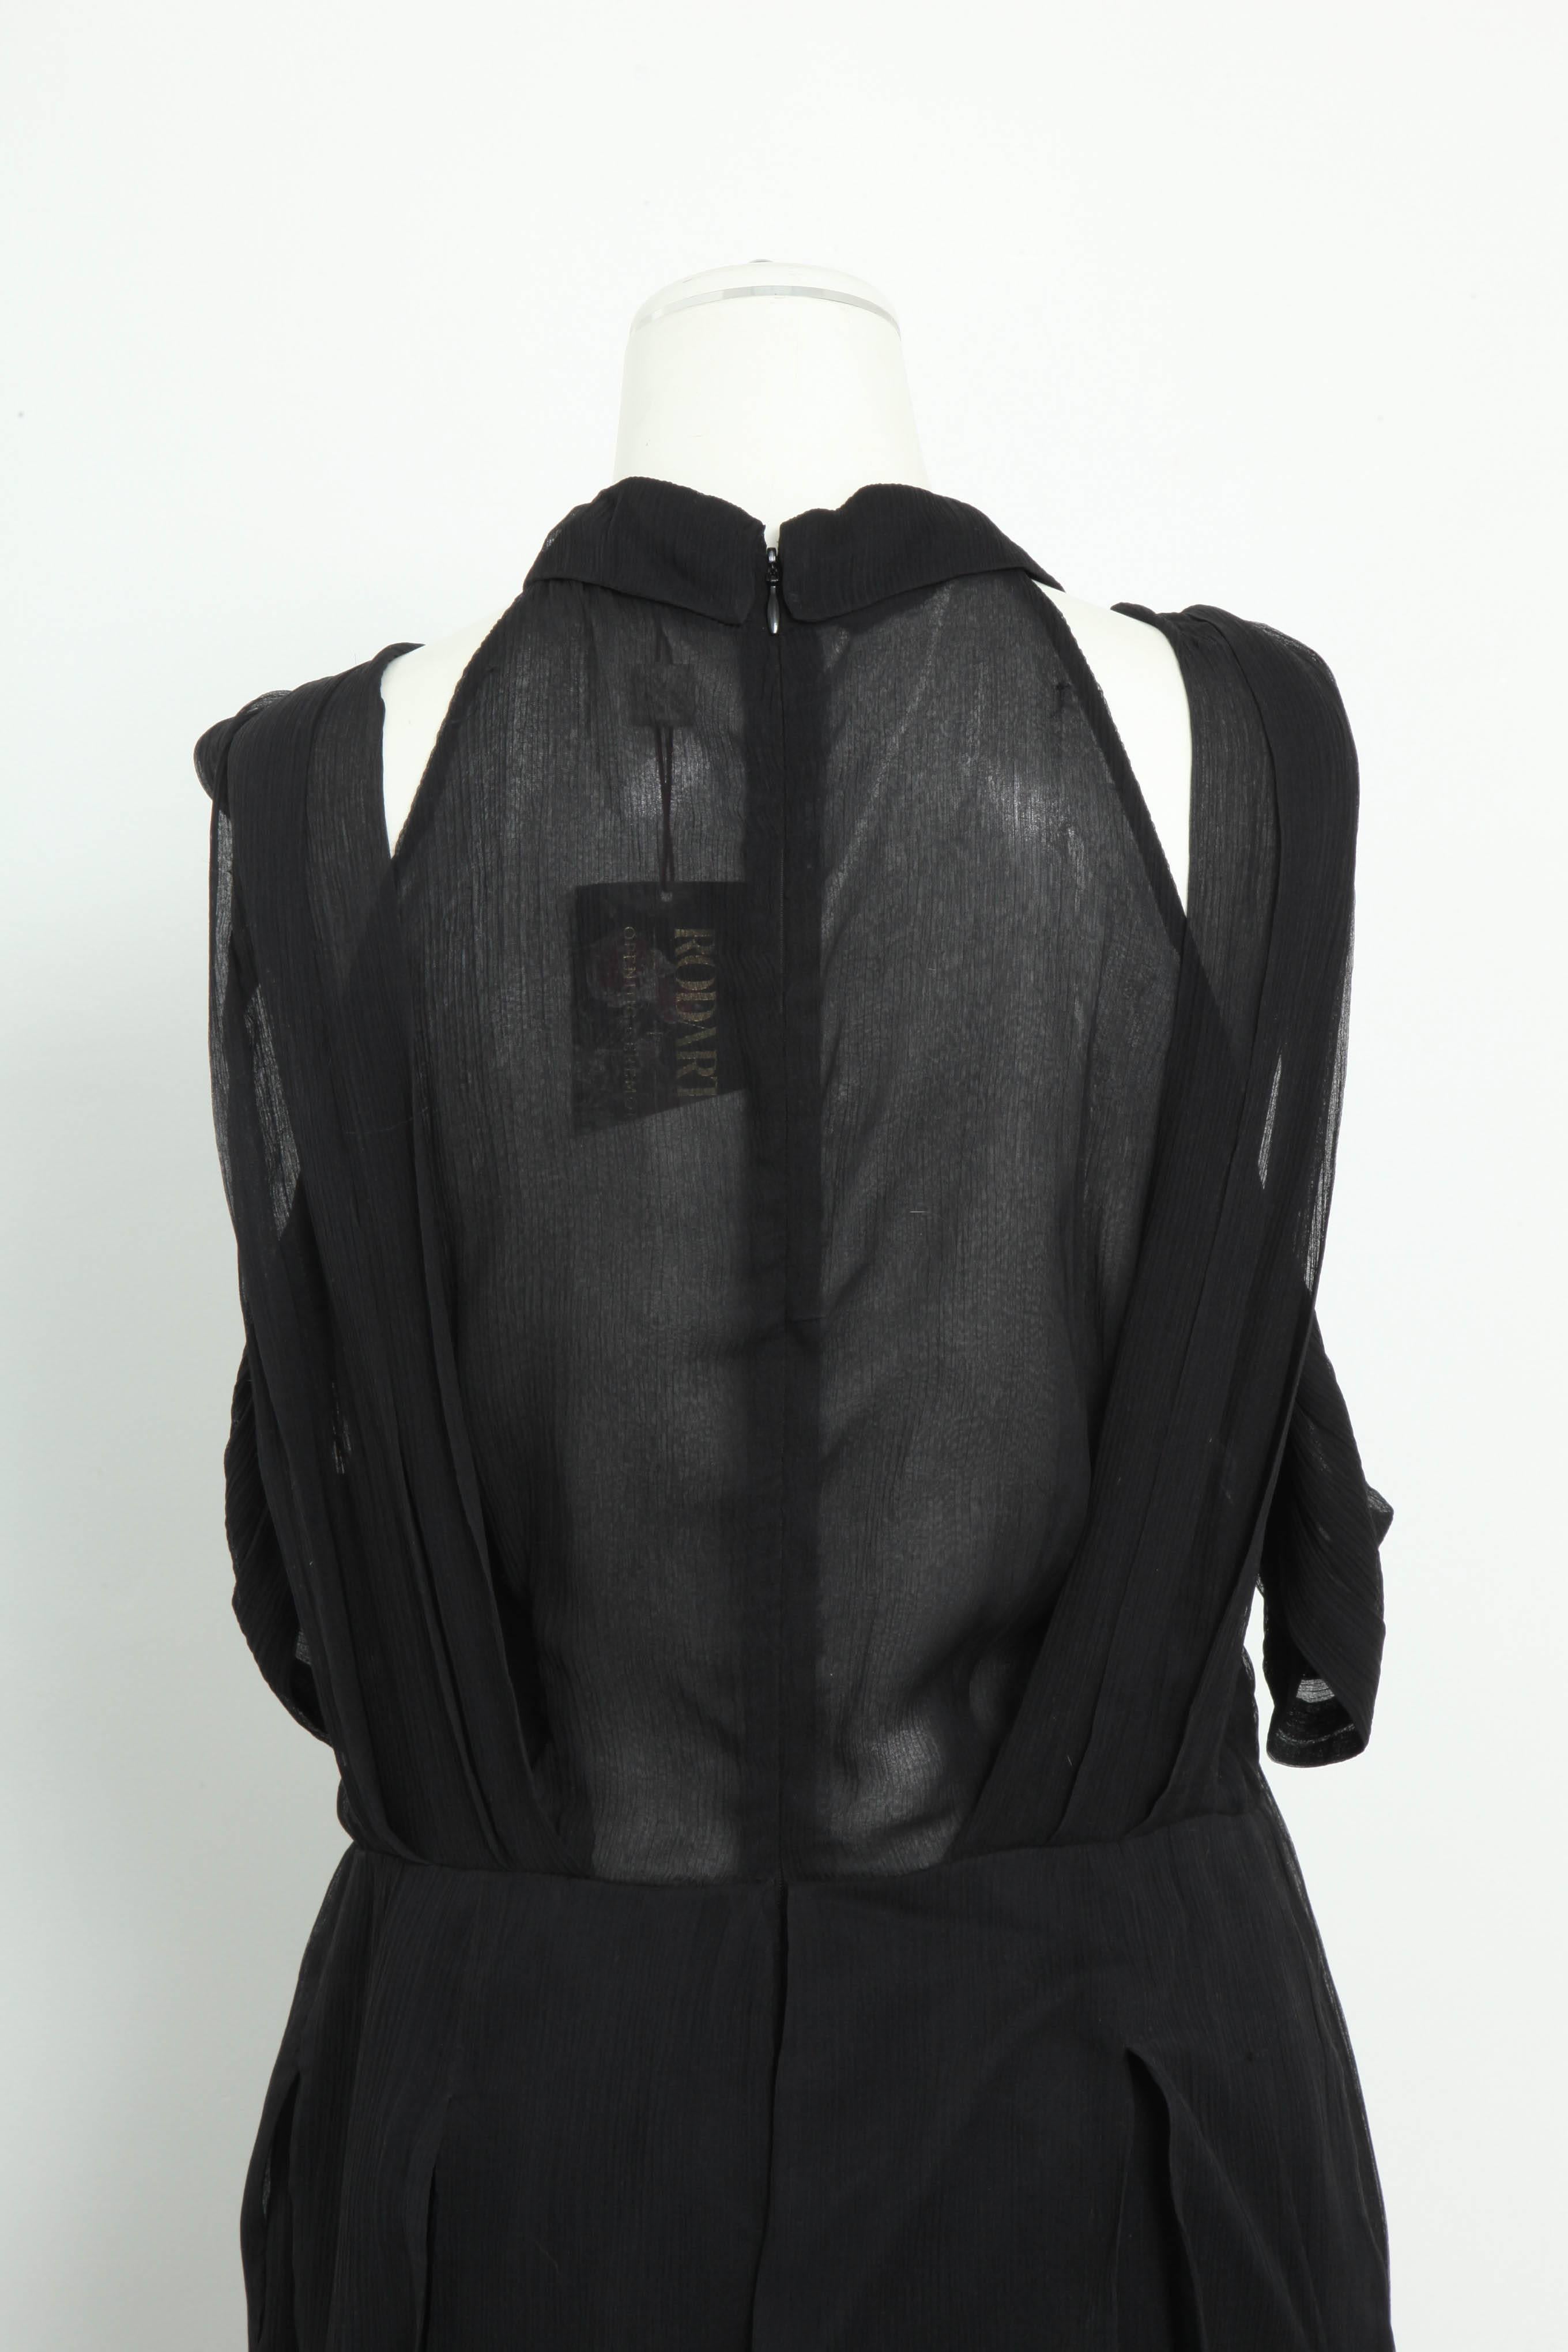 Rodarte Black See-Through Chiffon Gown Dress 1